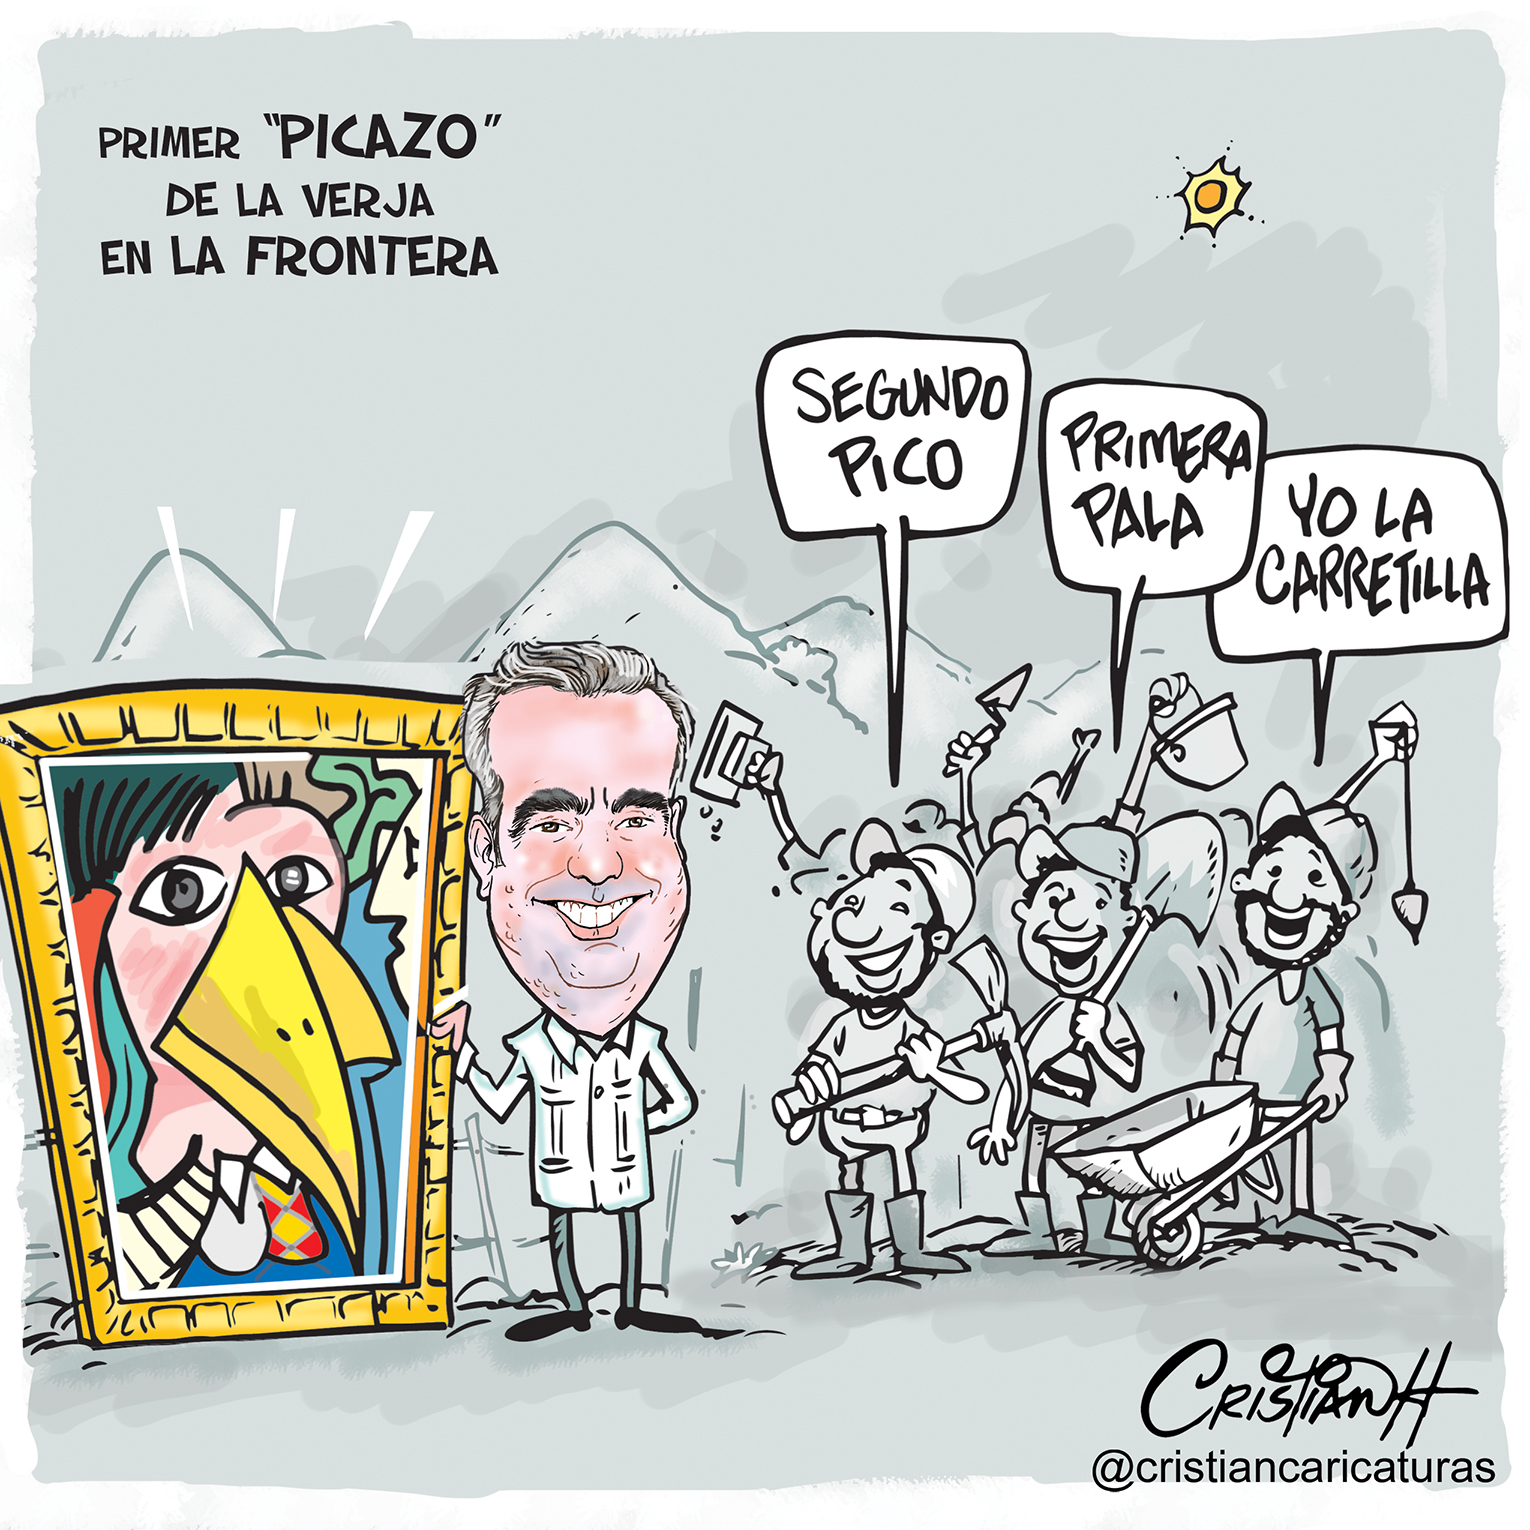 Cristian Hernández on Twitter: "Mi caricatura de hoy en @ElDia_do . . . .  #Caricatura #verja #Frontera #Picasso #criscaricaturas  https://t.co/SLLMQ778Xf" / Twitter